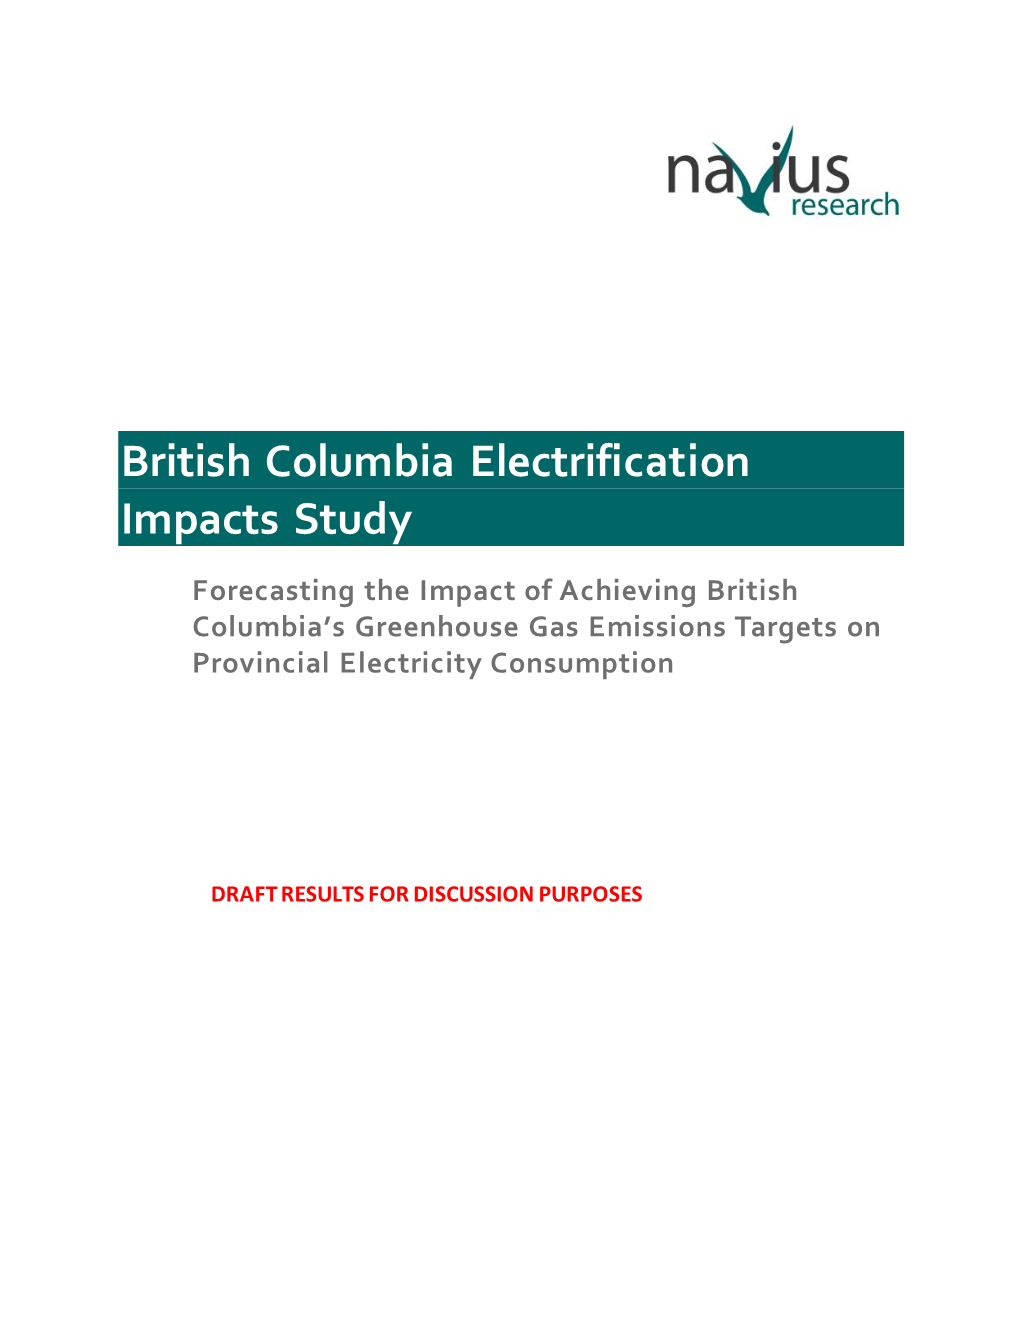 British Columbia Electrification Impacts Study